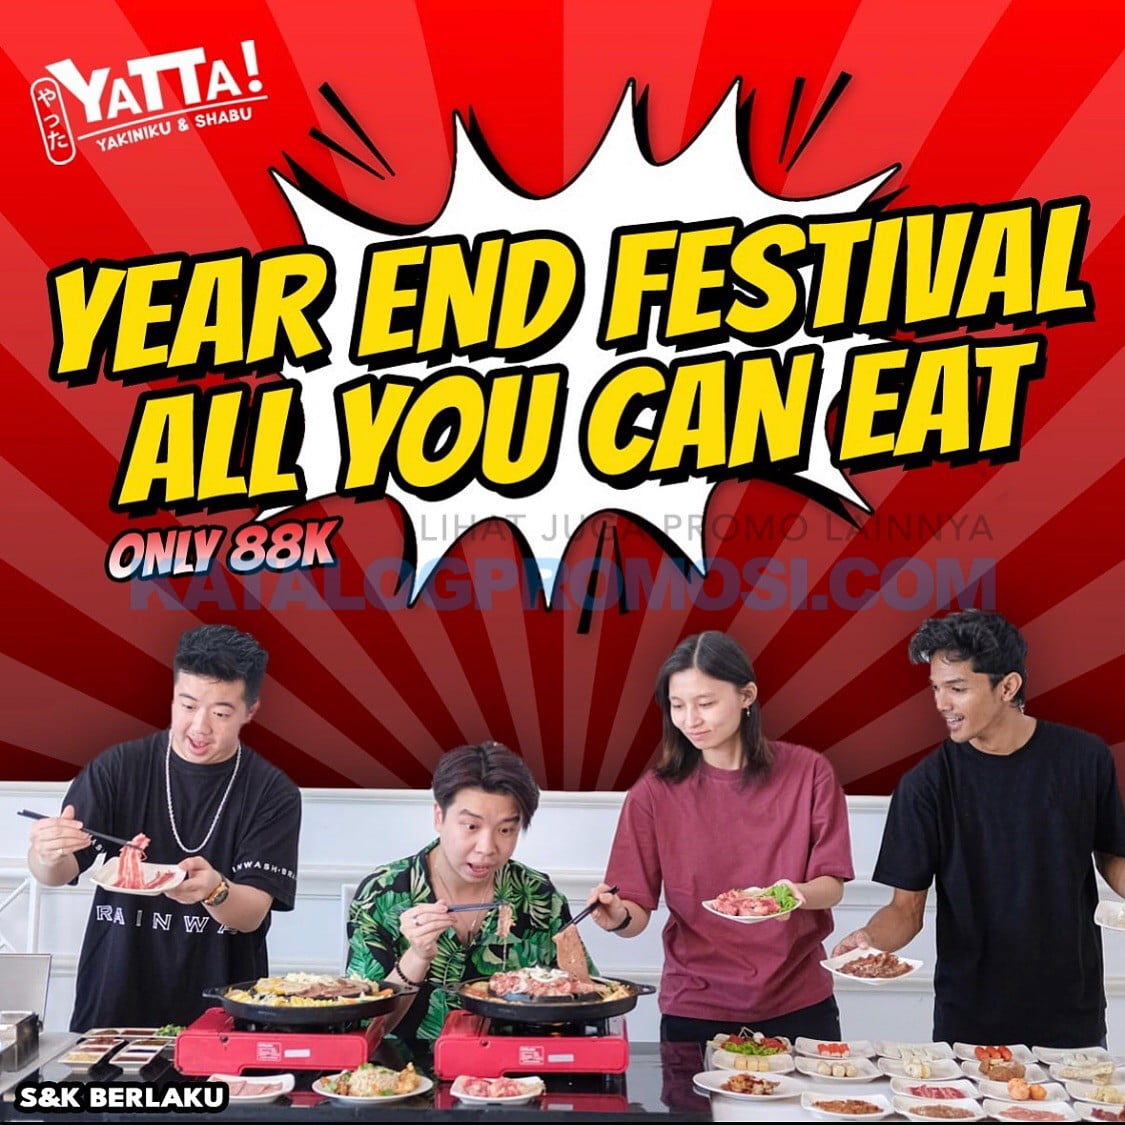 PROMO YATTA! YEAR END FESTIVAL: ALL YOU CAN EAT CUMAN 88K AJA